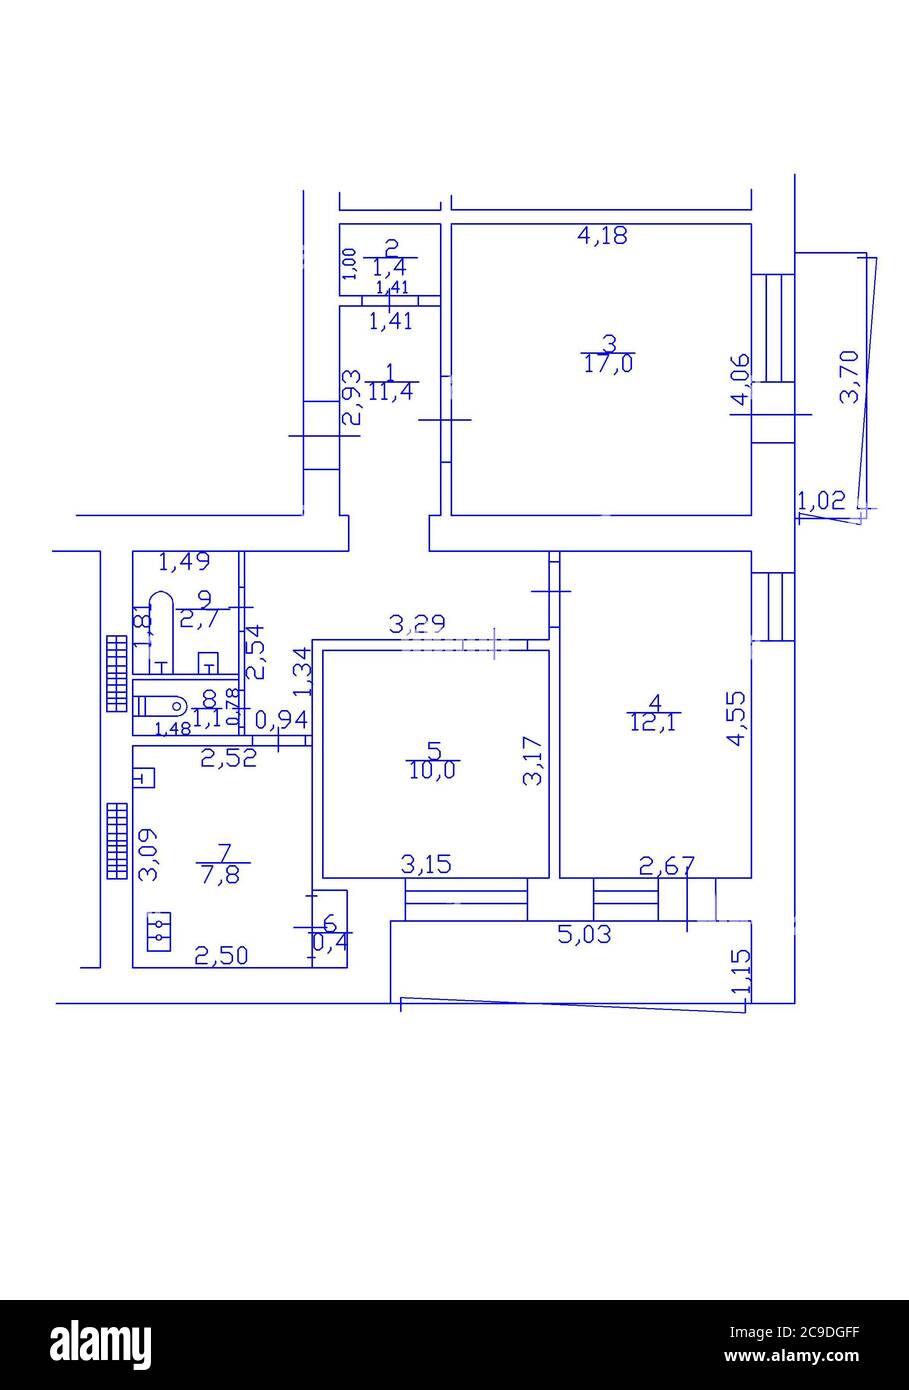 Illustration Floor Plan Floorplanner Stock Photo by